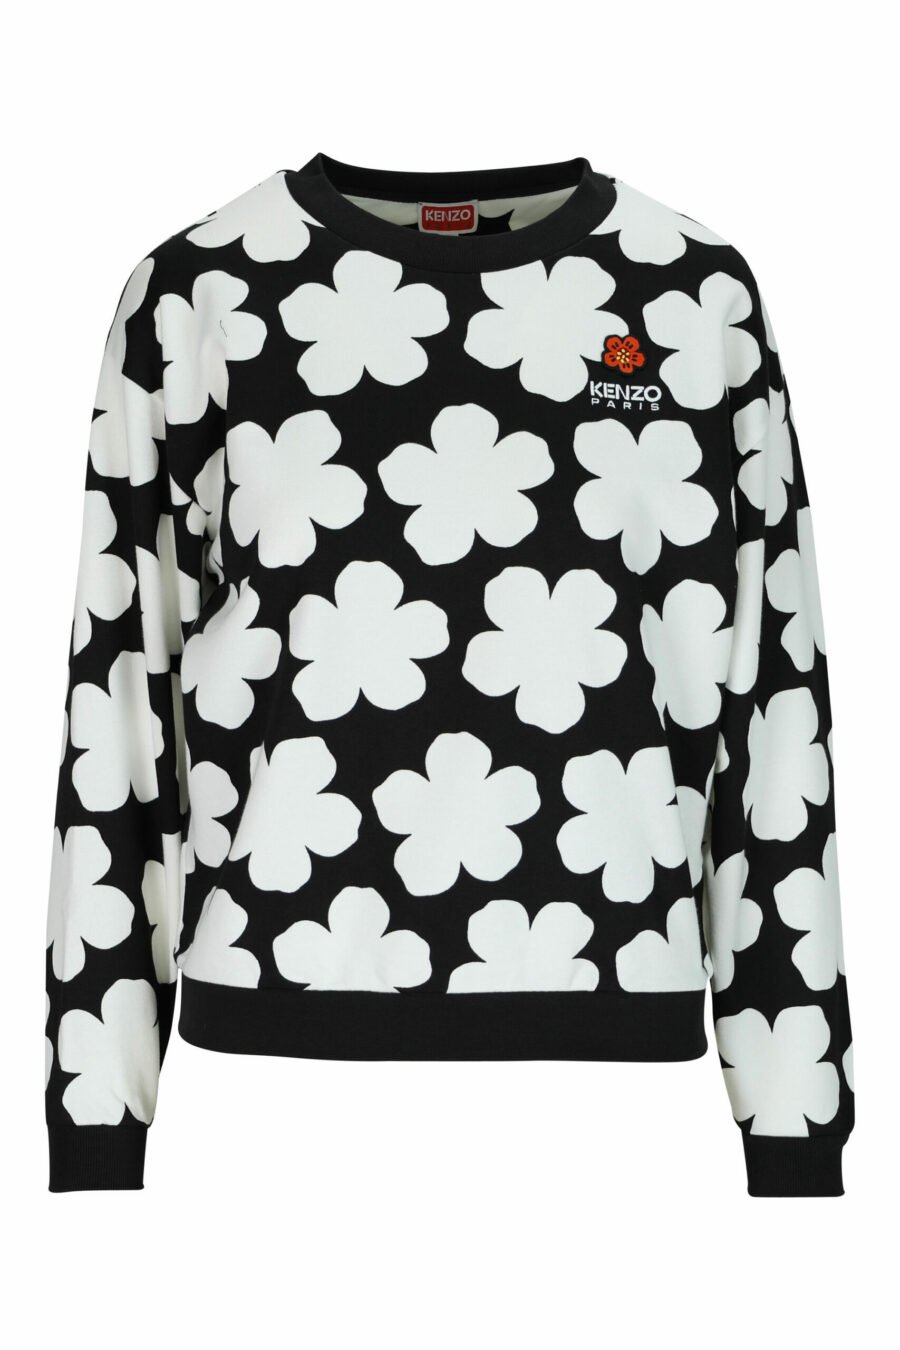 Sweatshirt noir "all over mini flower kenzo" - 3612230570351 en écailles